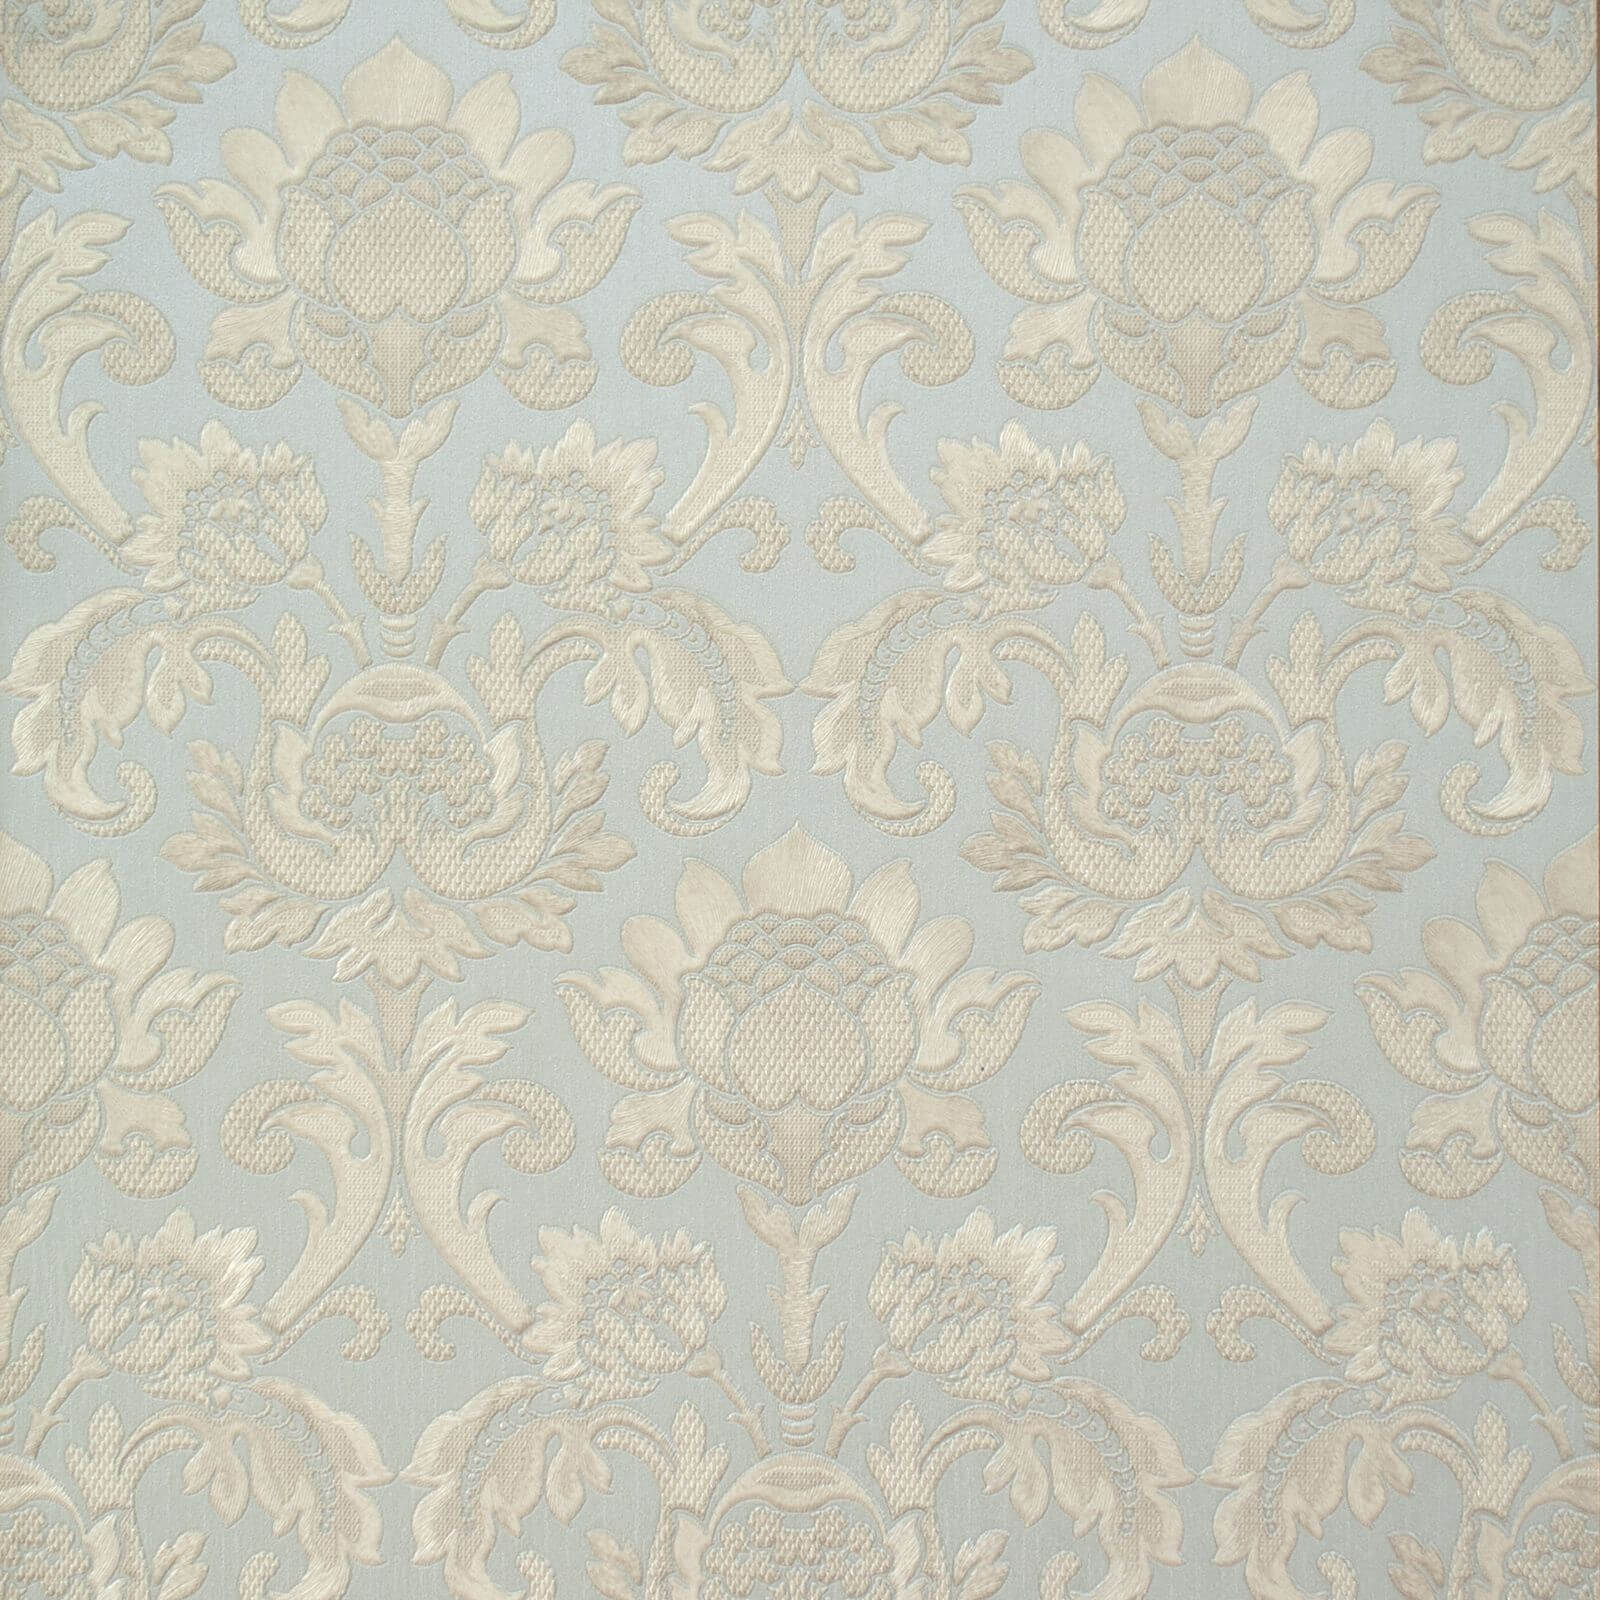 Belgravia Decor Sorrentino Plain Embossed Metallic Wedgewood Wallpaper